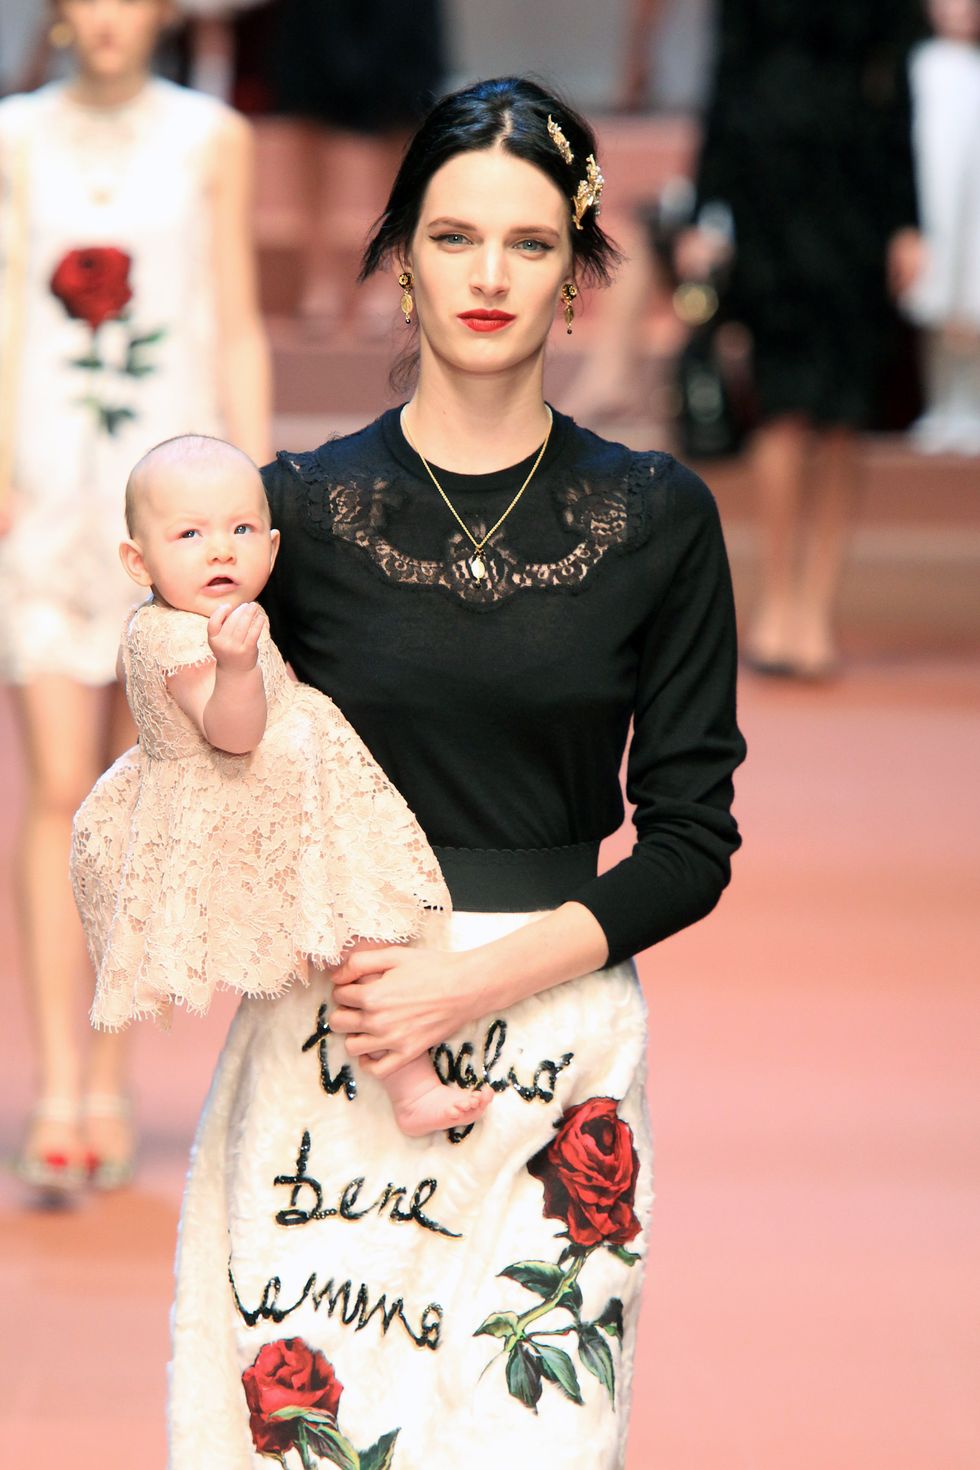 A model at Dolce & Gabbana's Milan Fashion Week AW15 show